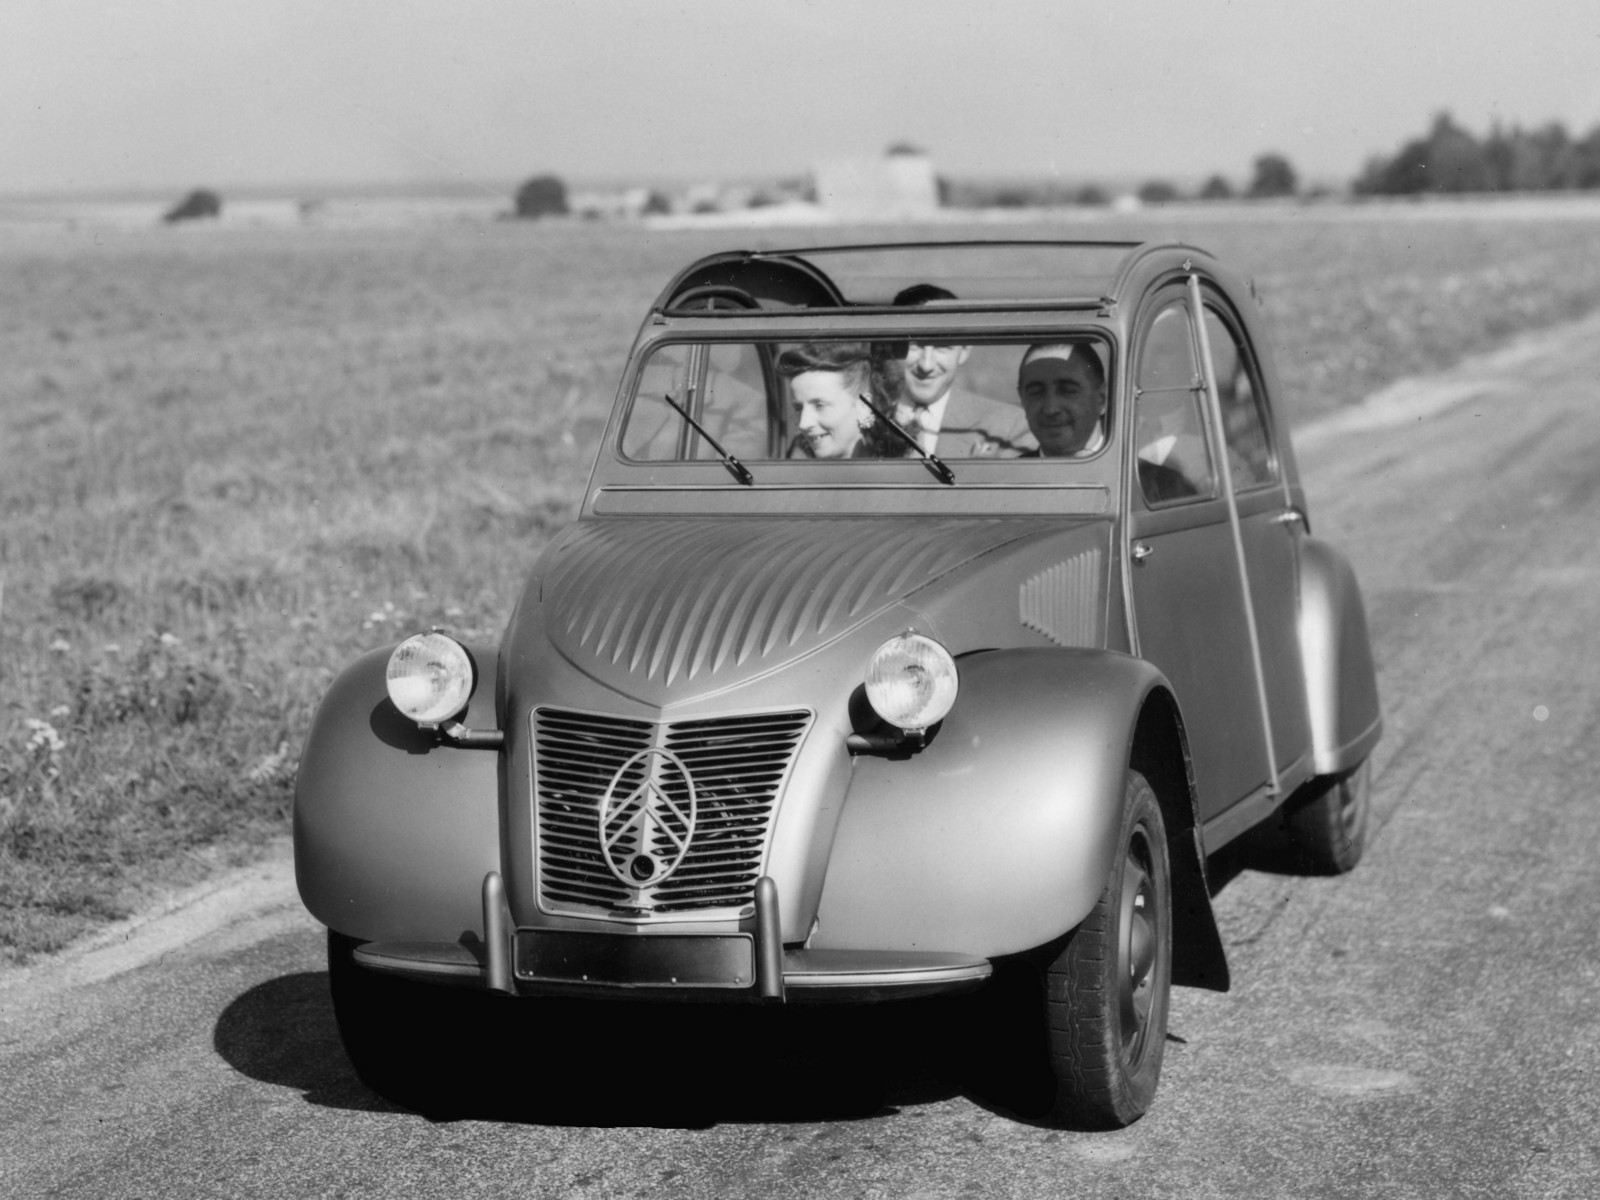 Citroën desenvolve carro conceitual no formato de ovo